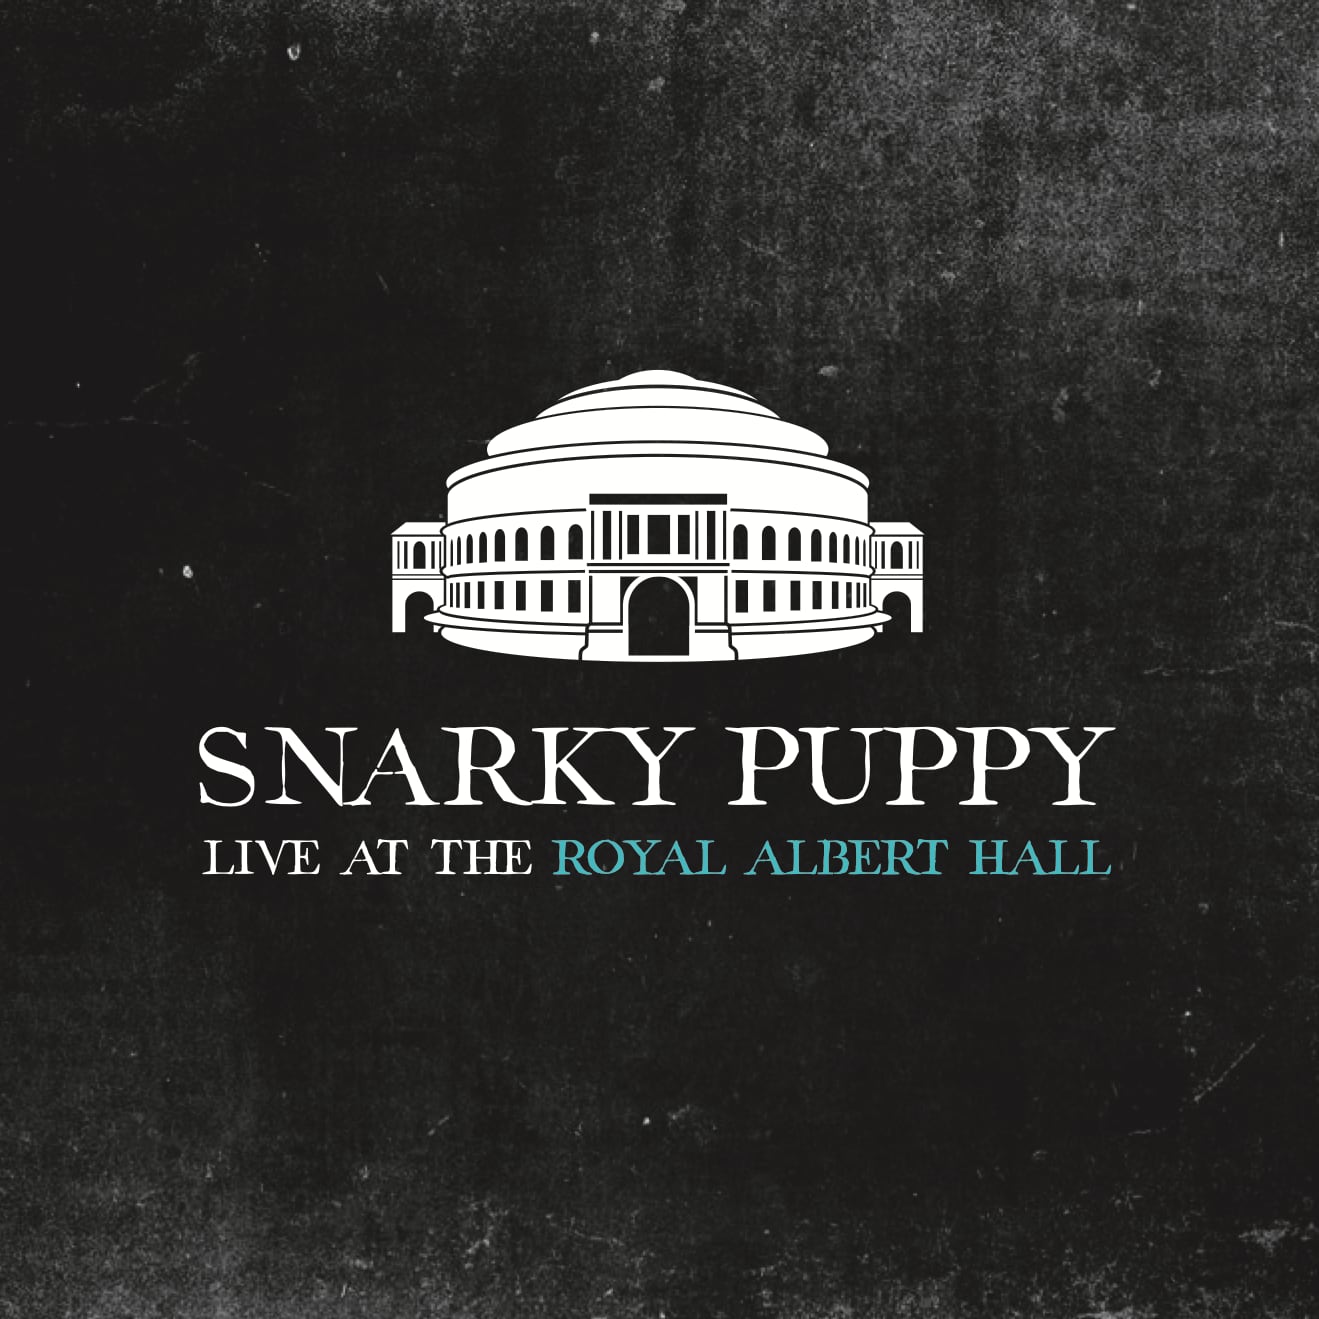 Snarky Puppy Live At The Royal Albert Hall - Download MP3 or WAV